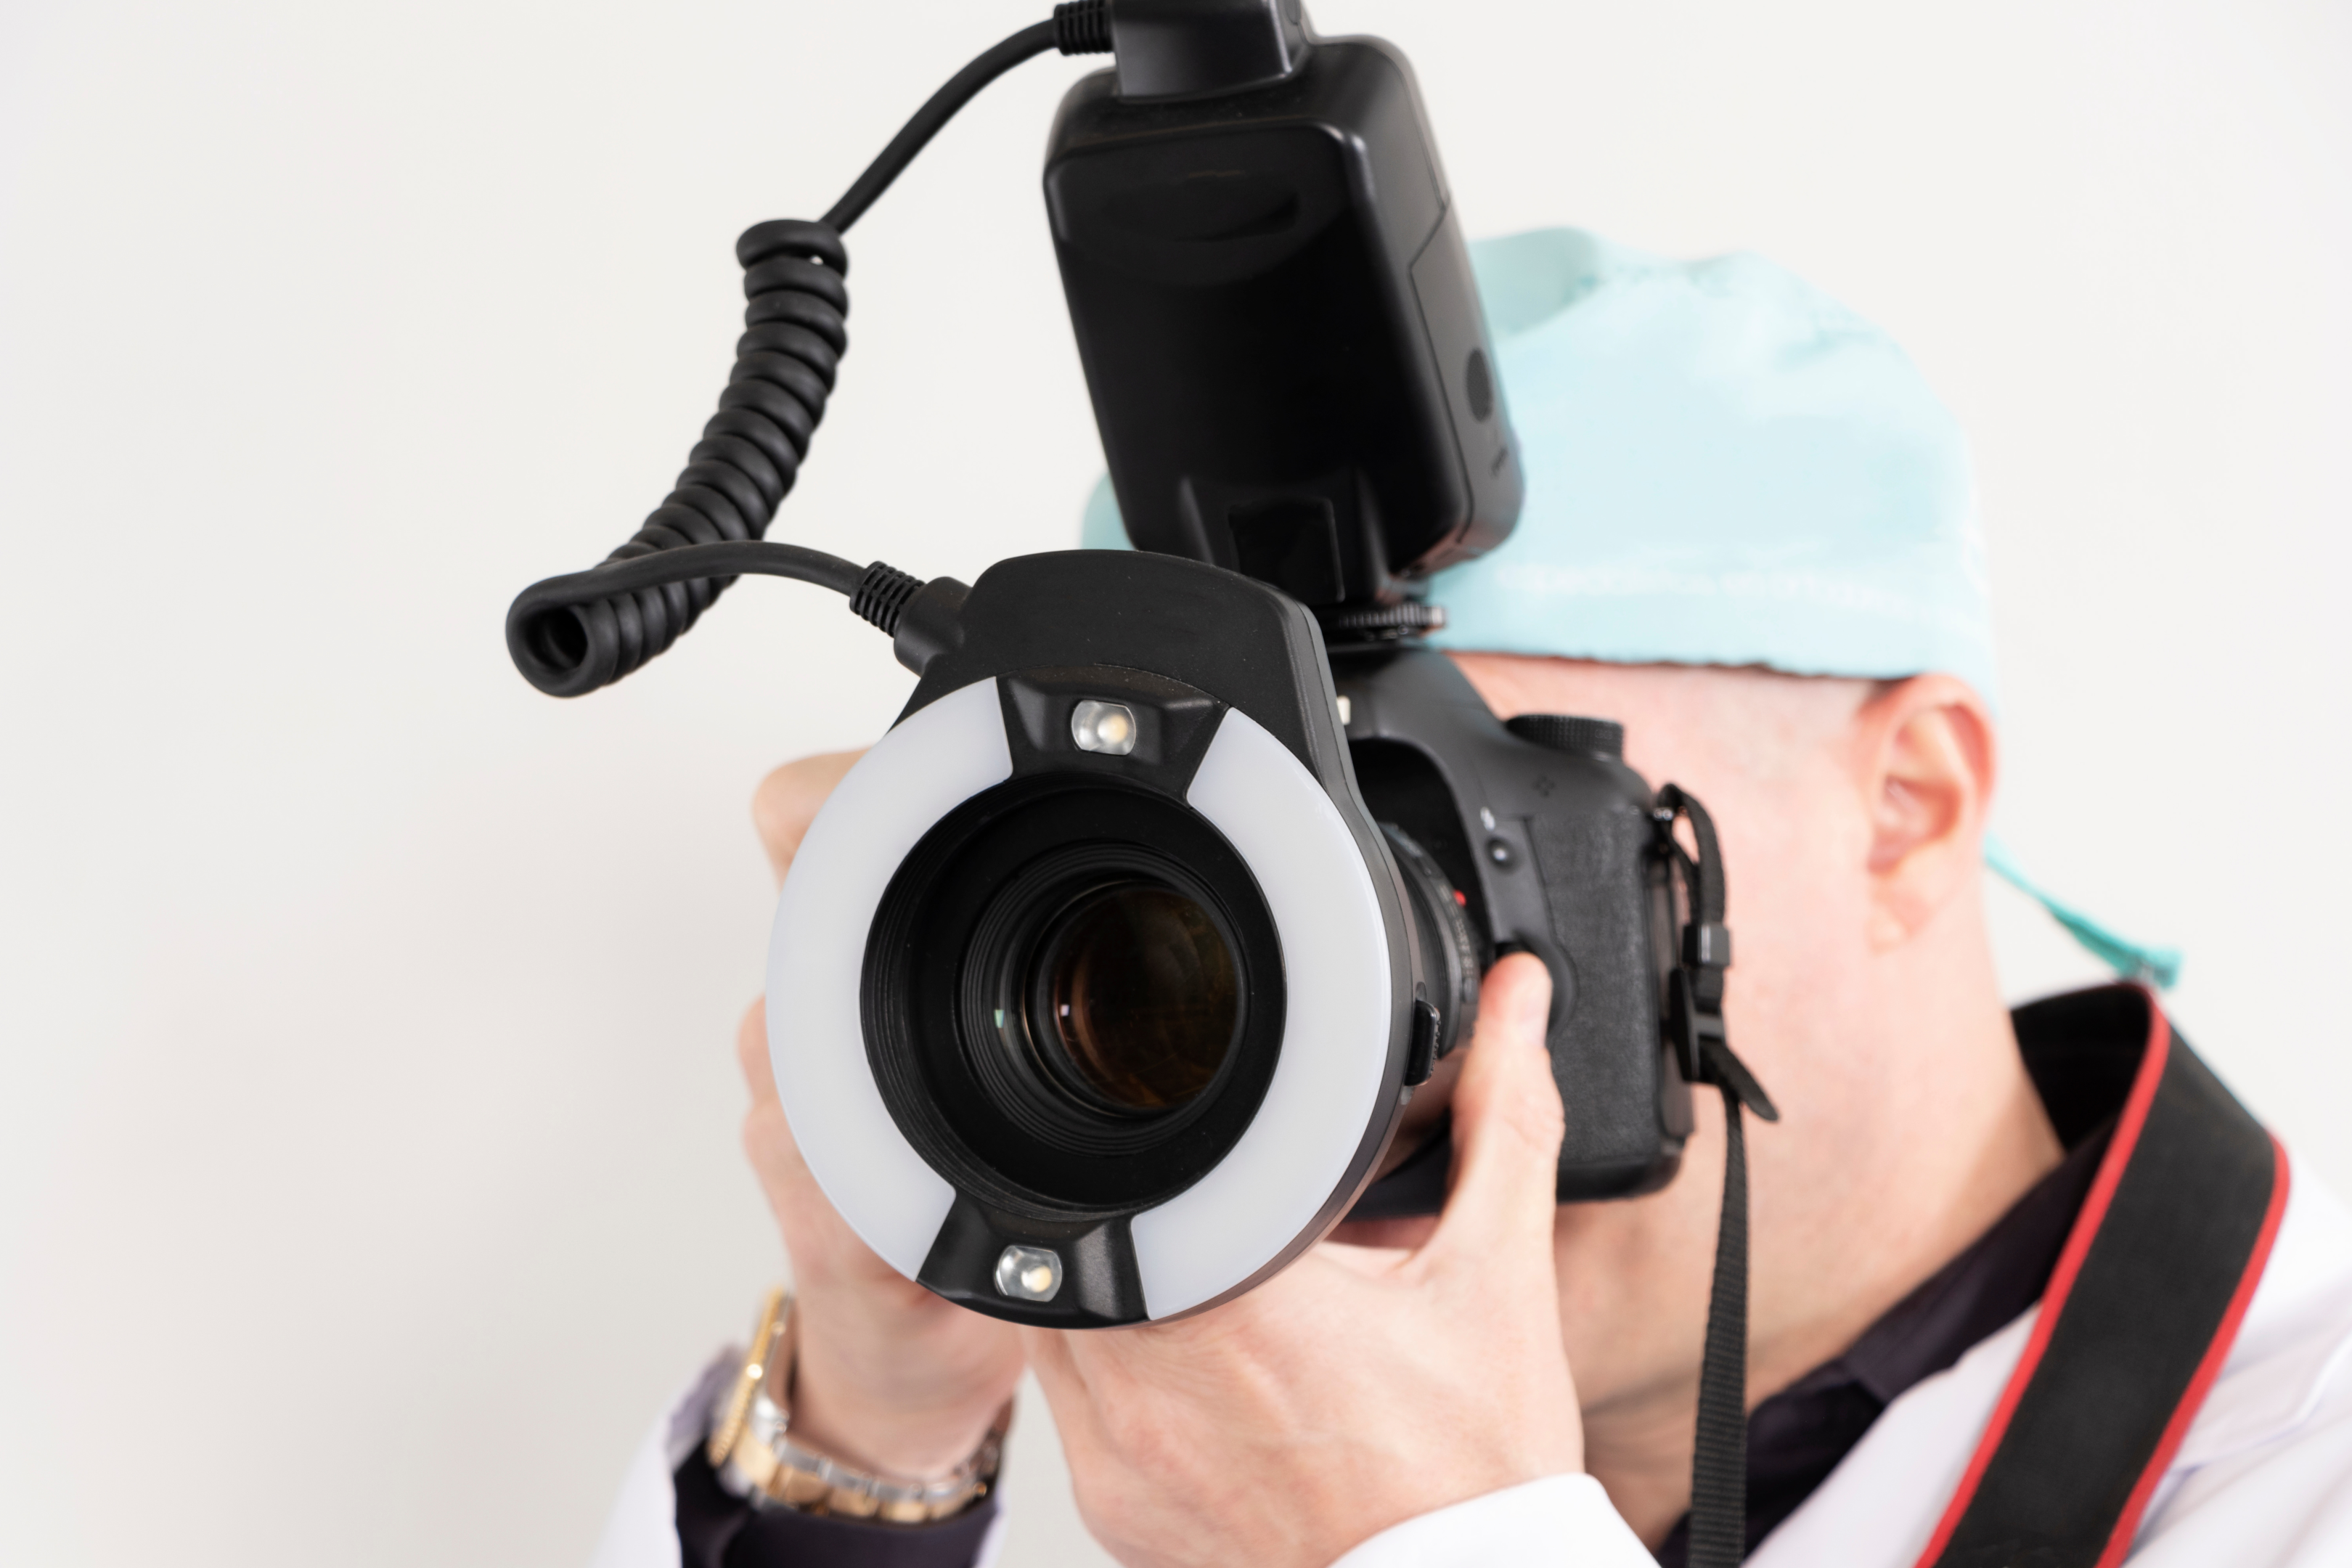 Macro and Dental Photography SLR DSLR Camera Twin Flash Bracket | Godox  Flash and Trigger for Dentist